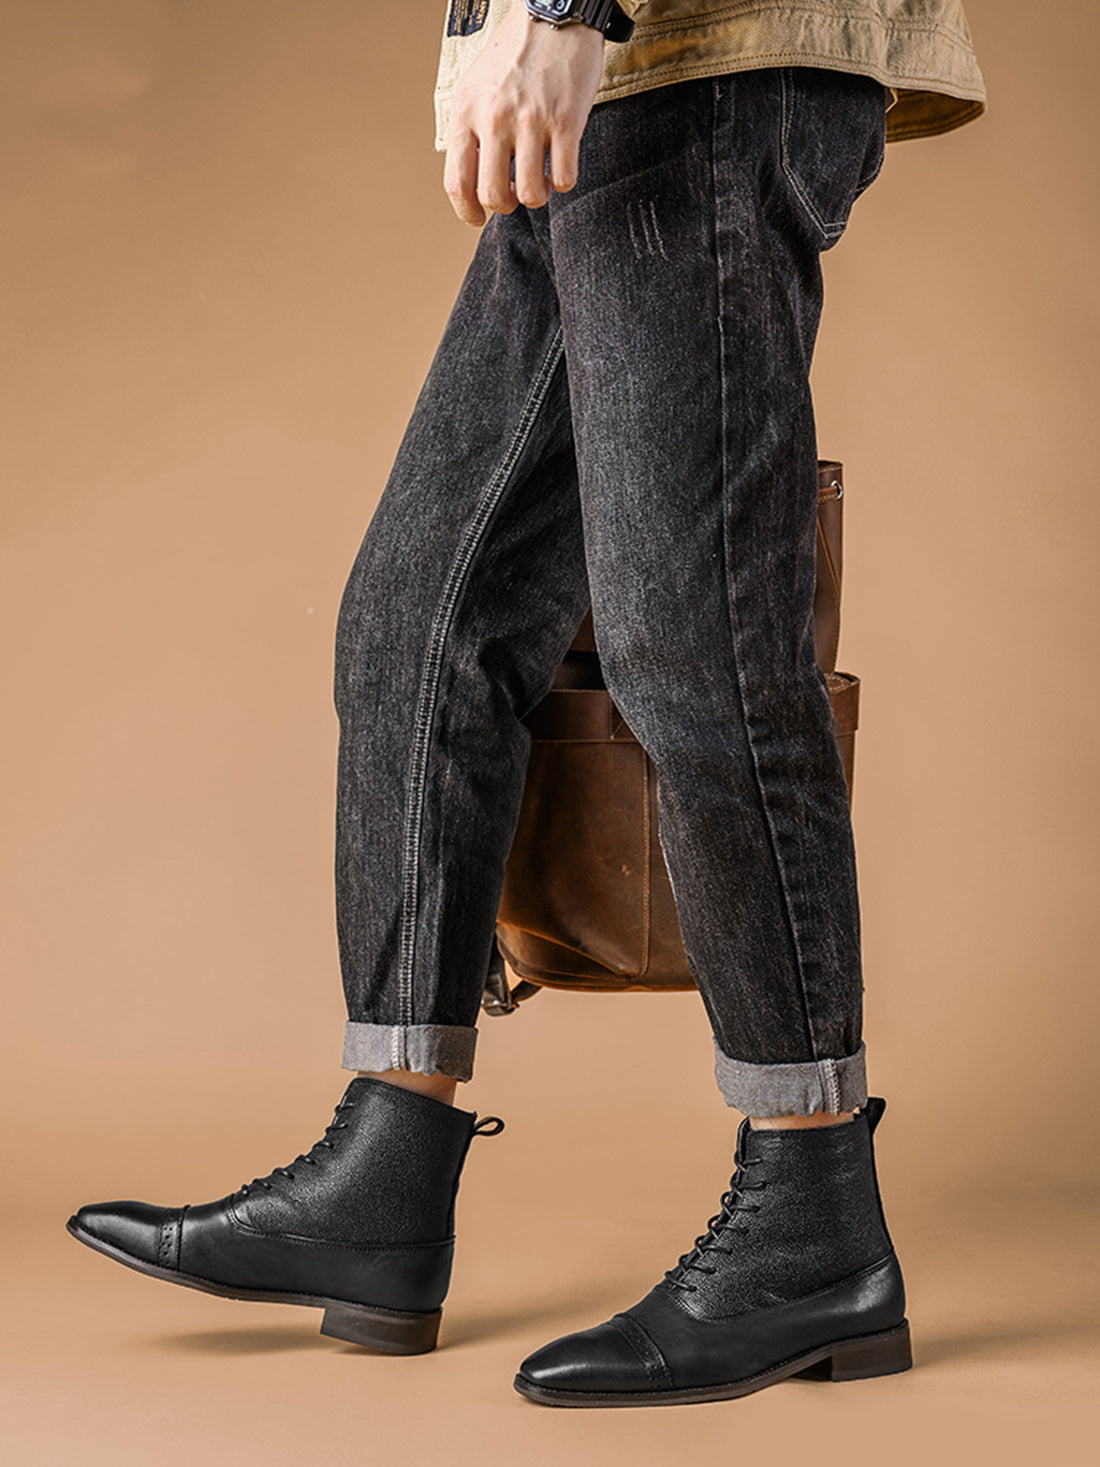 Men's Brogue Dress Boots Above Ankle